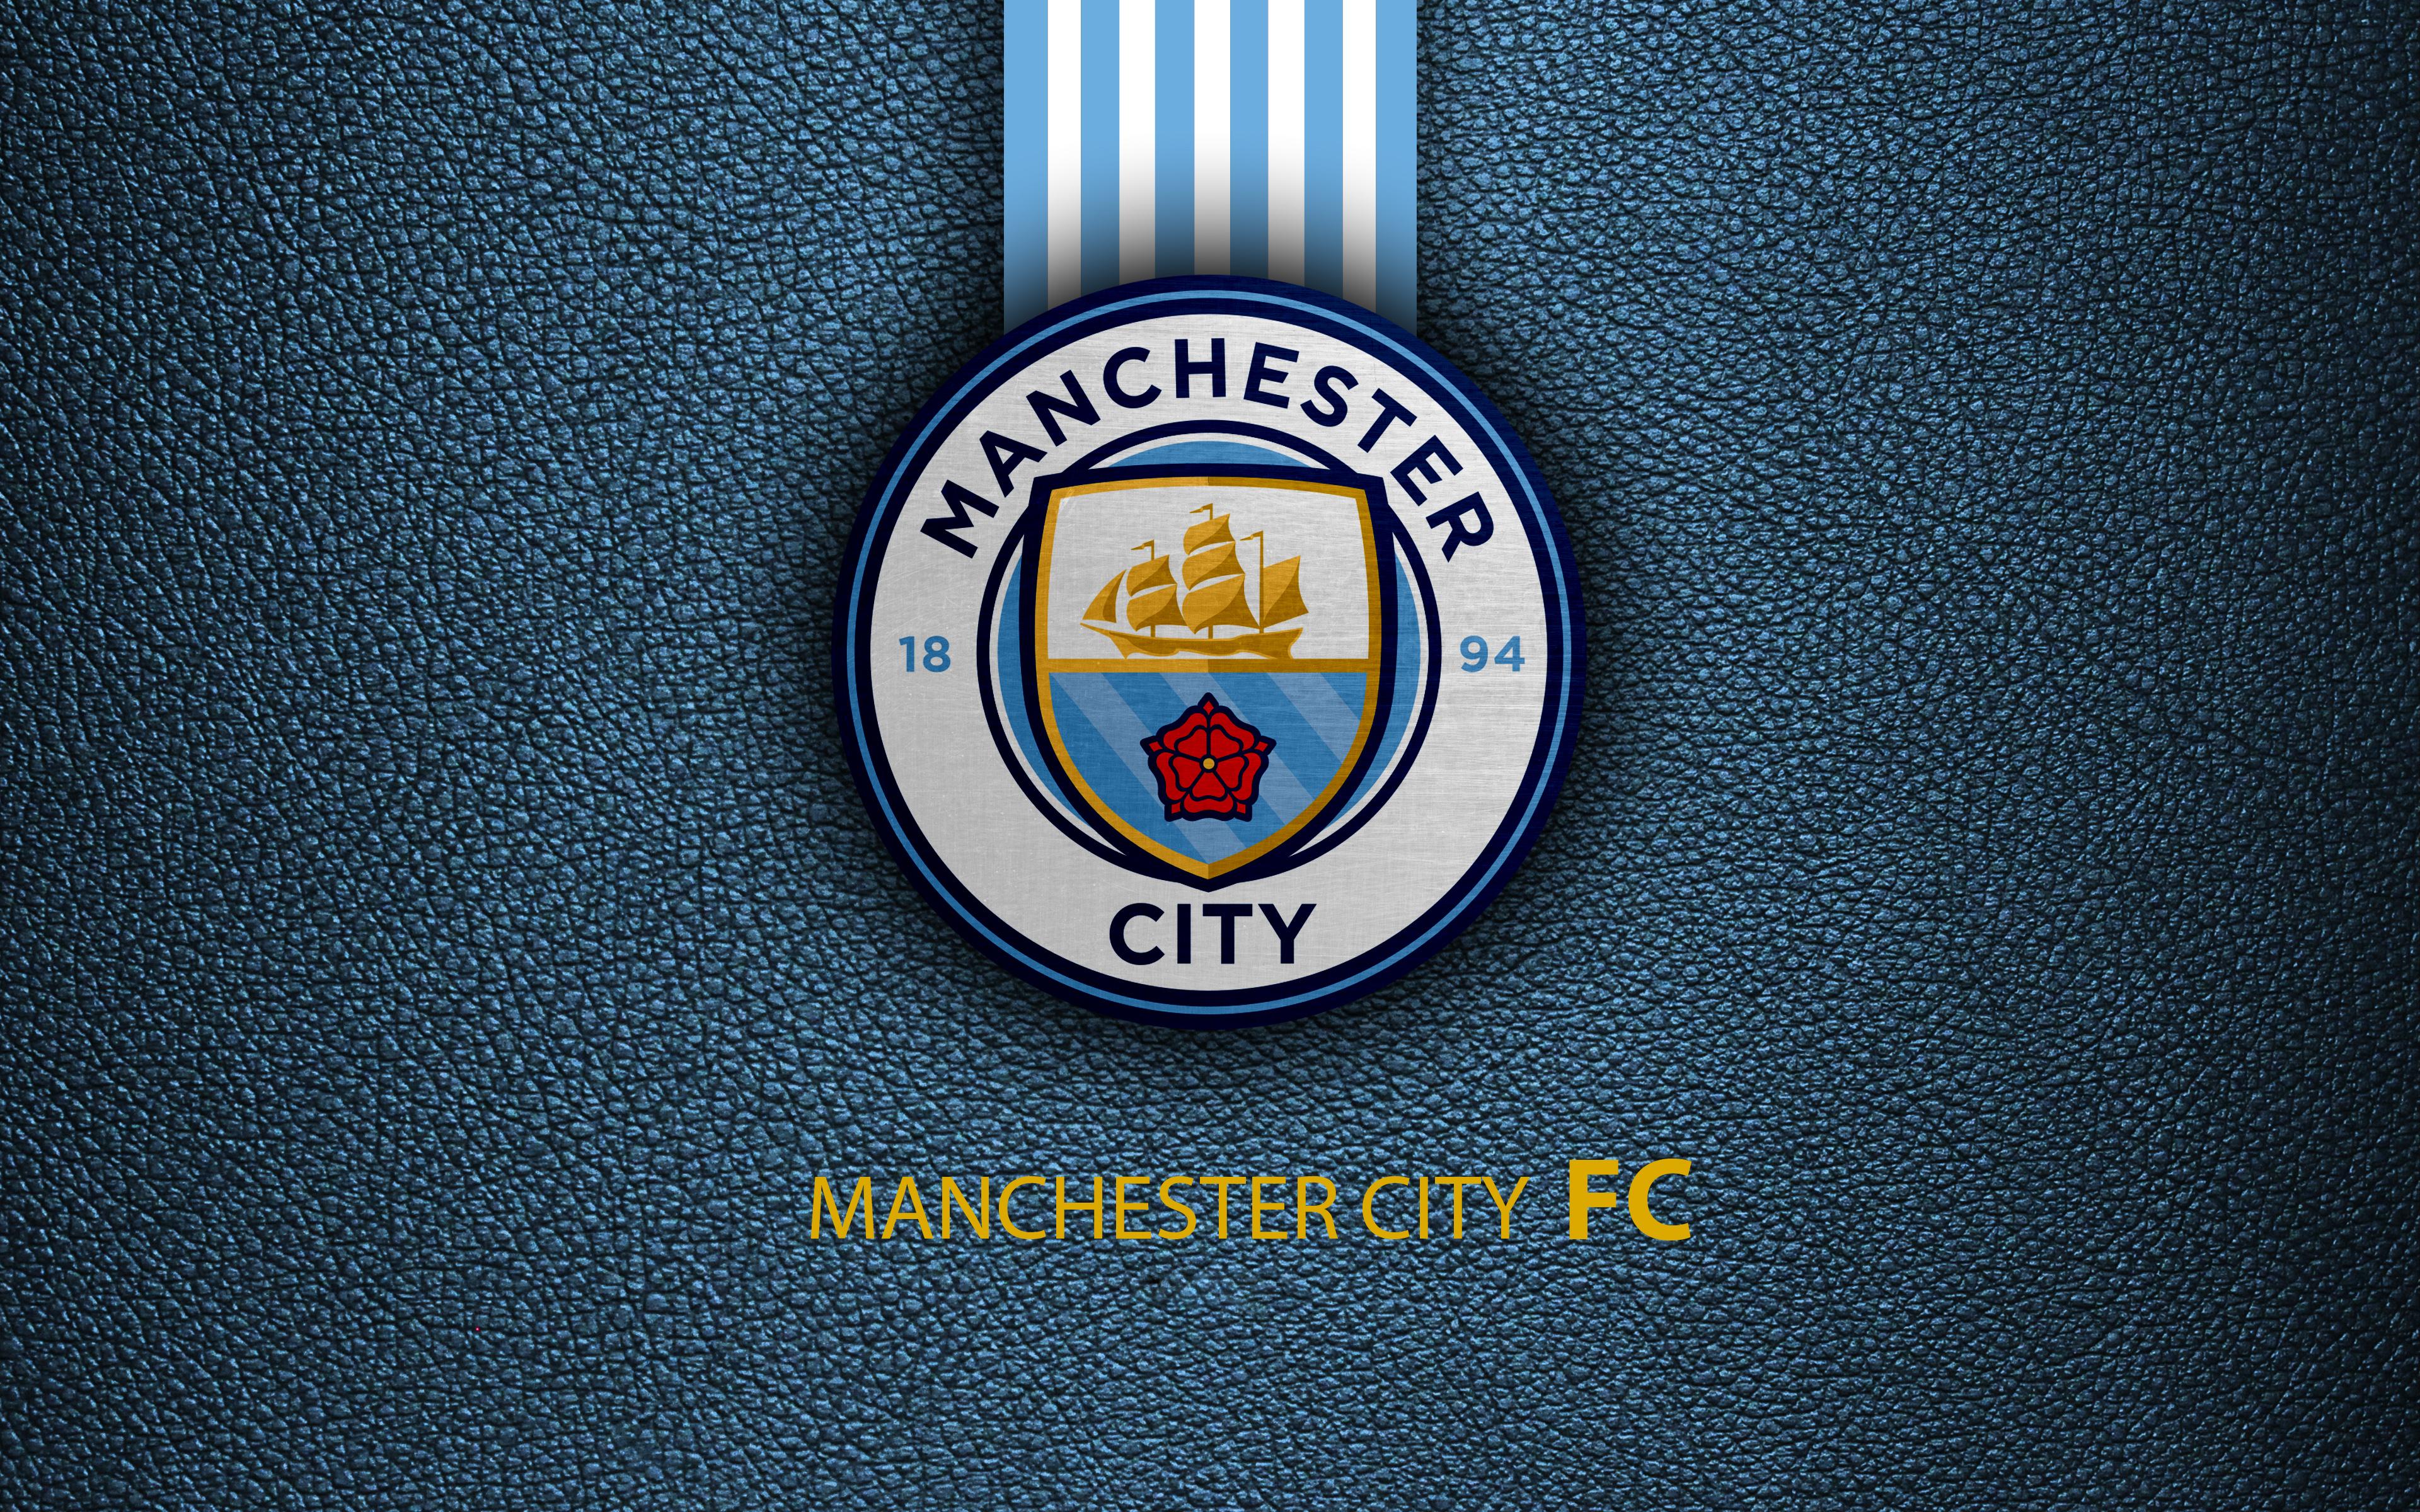 Manchester City Logo 4k Ultra HD Wallpaper. Background